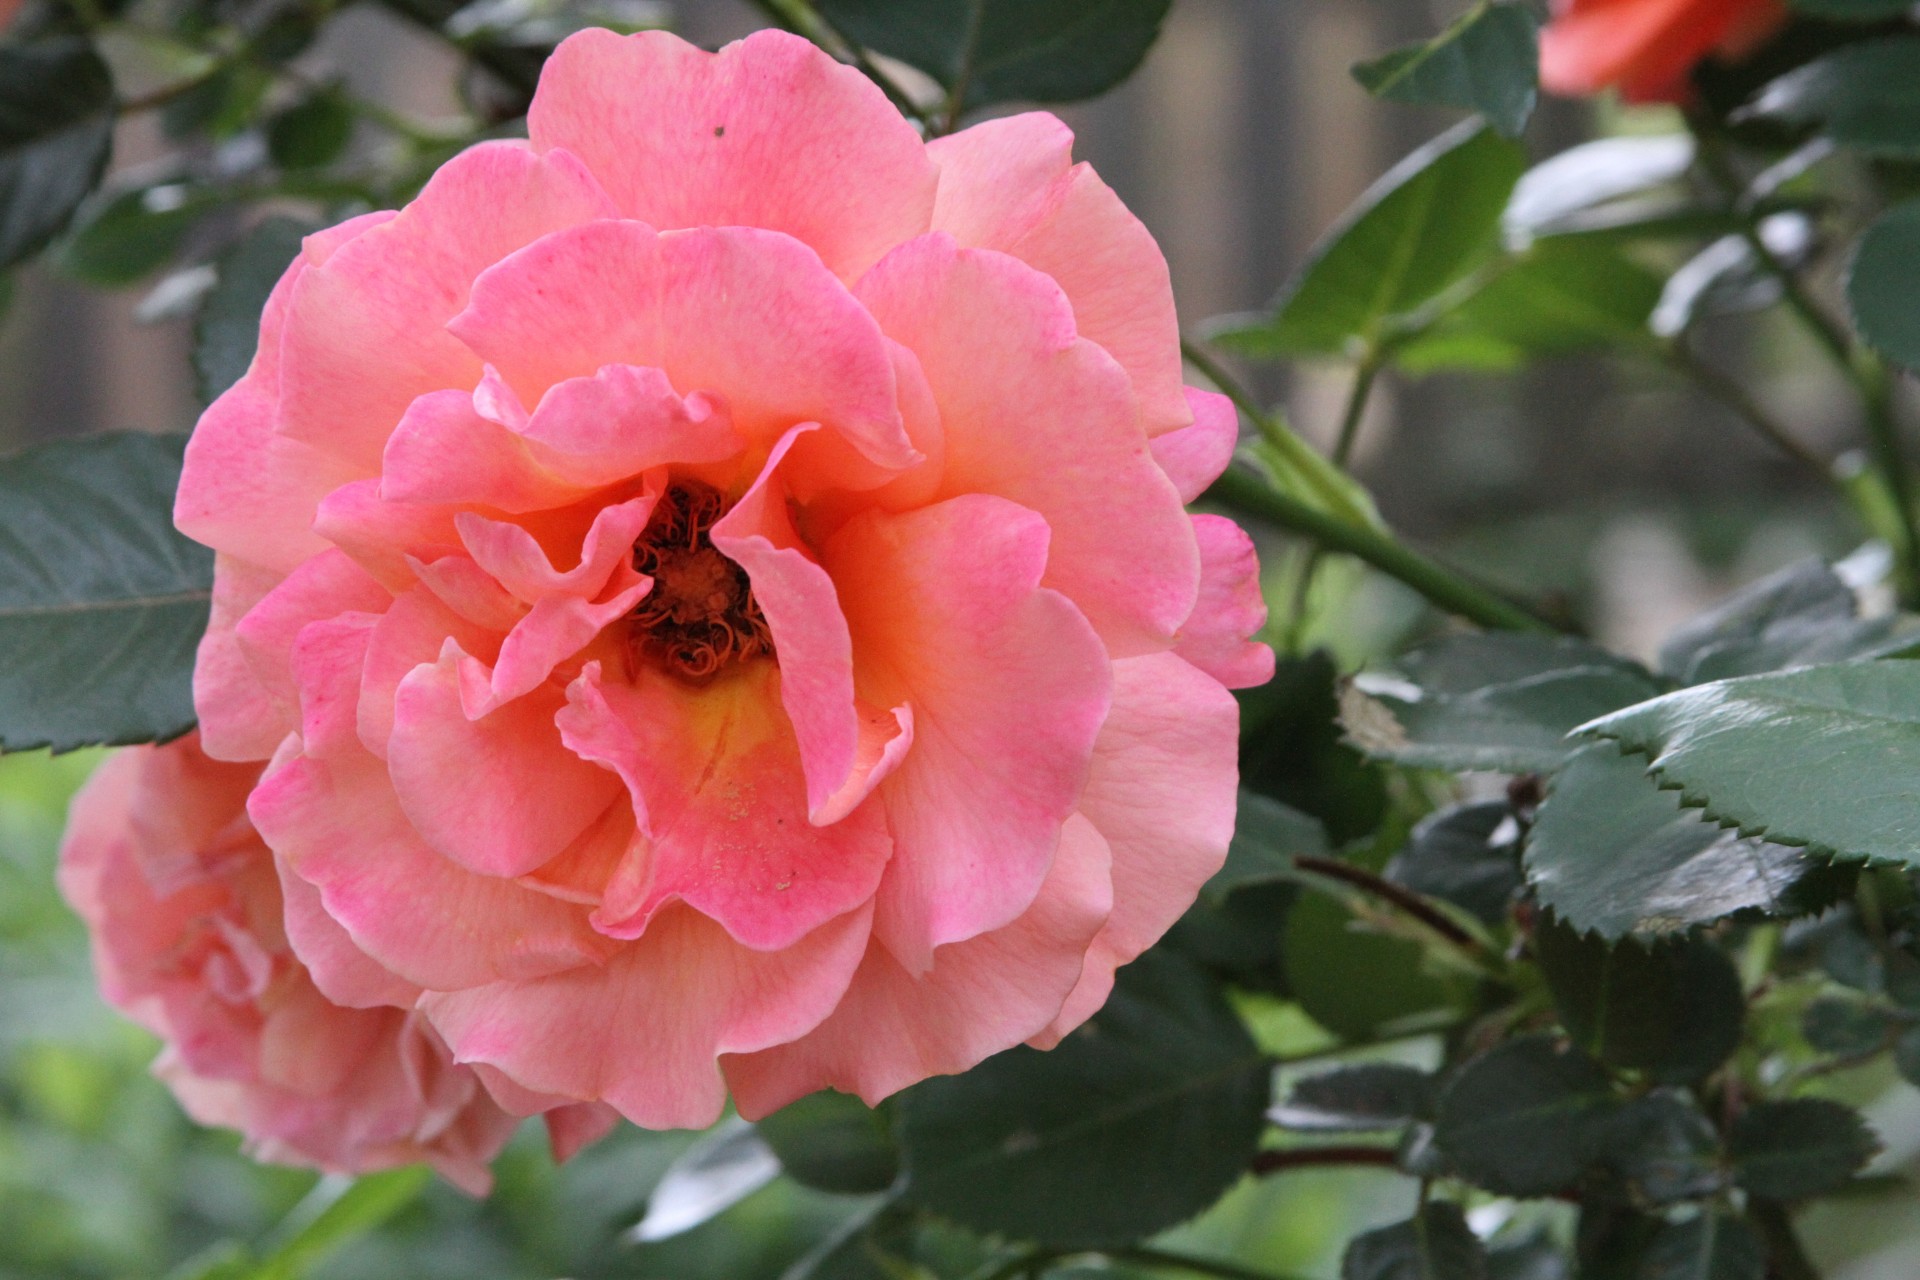 One pink rose probably hybrid